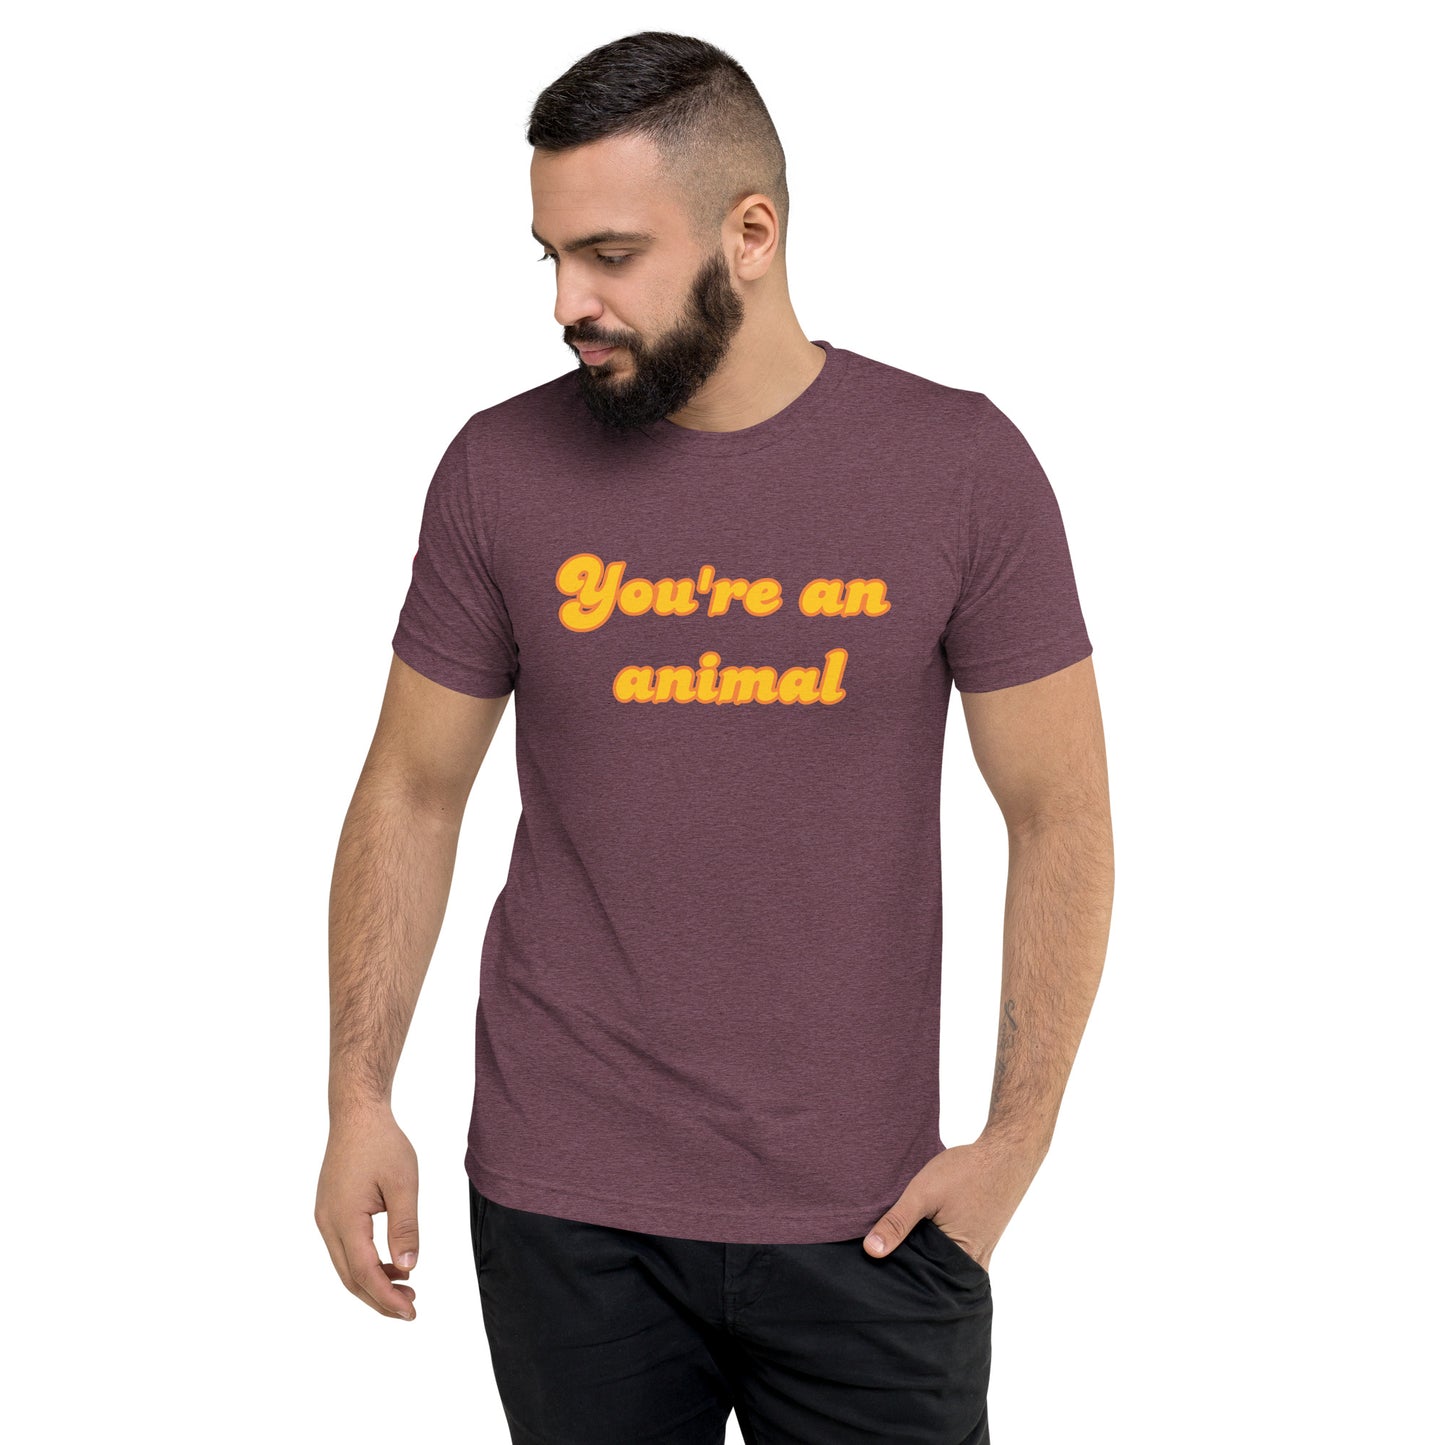 You're an animal - short sleeve t-shirt